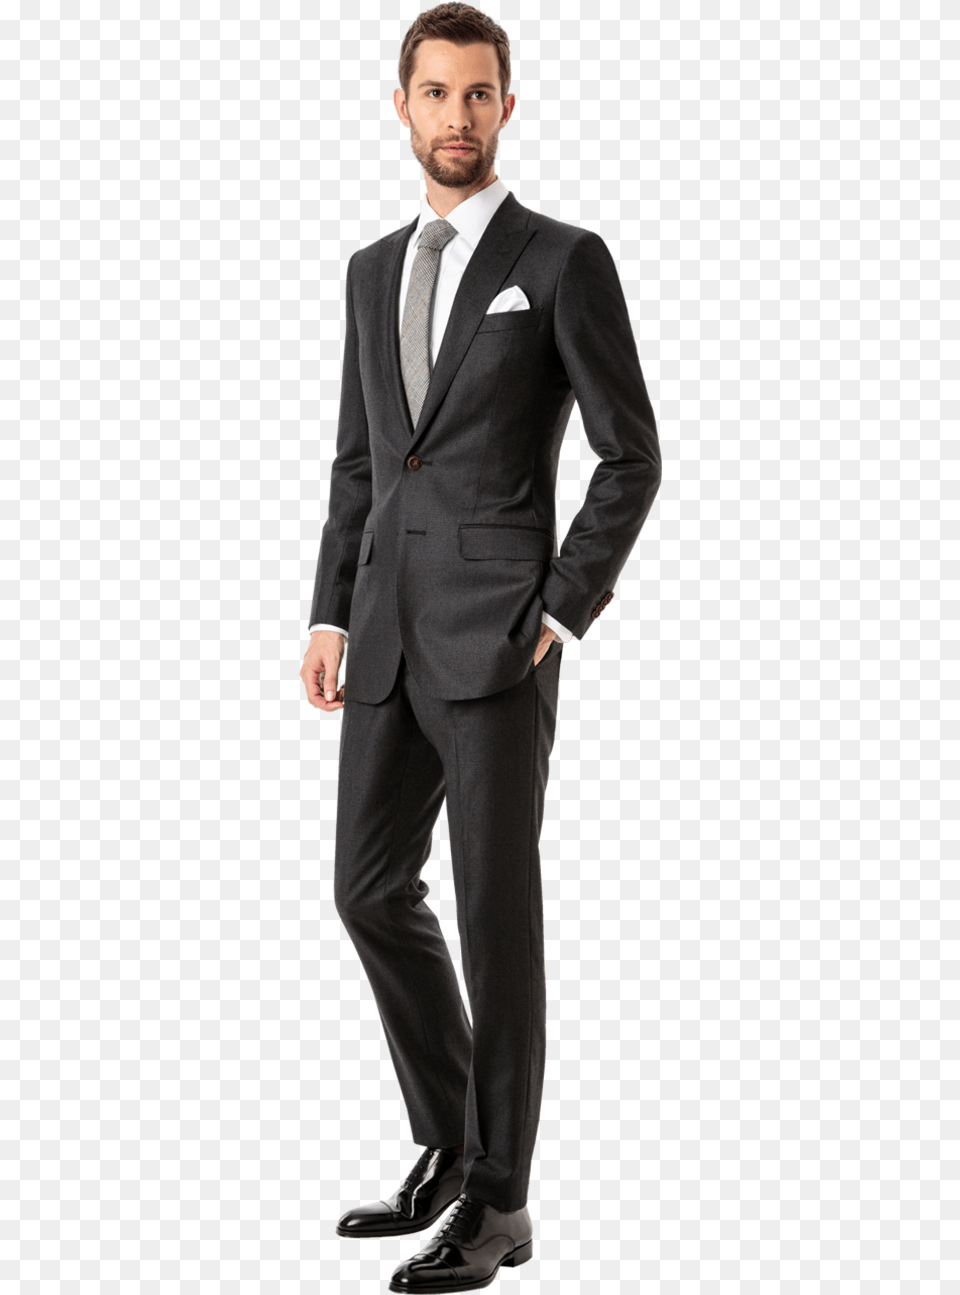 Collection Of Transparent Man Suit Transparent Man Suit, Tuxedo, Clothing, Formal Wear, Person Png Image